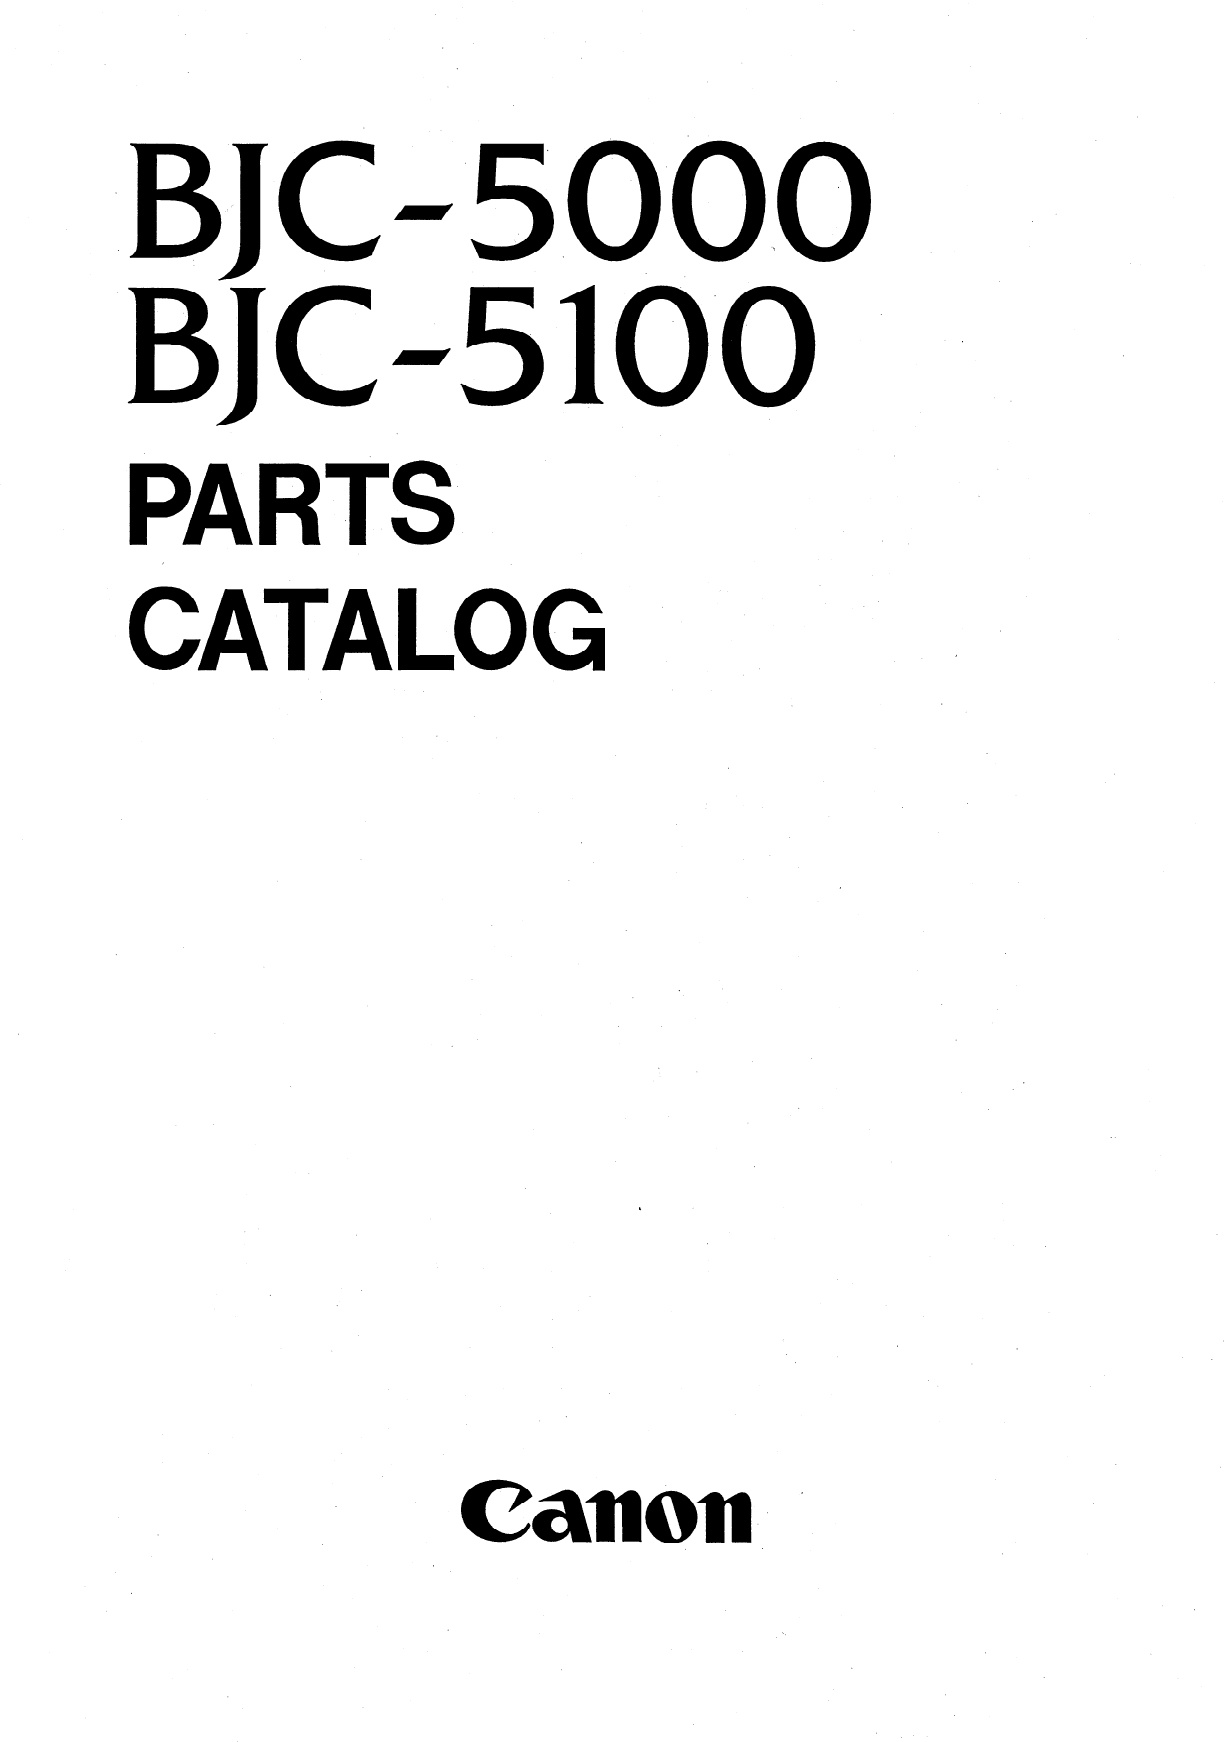 Canon BubbleJet BJC-5000 5100 Parts Catalog Manual-1